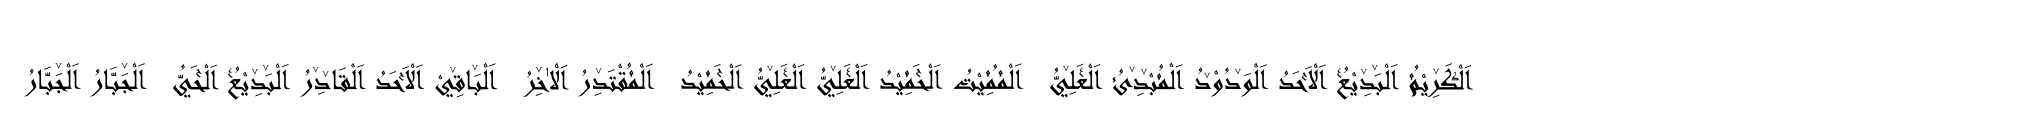 99 Names of ALLAH Linear image